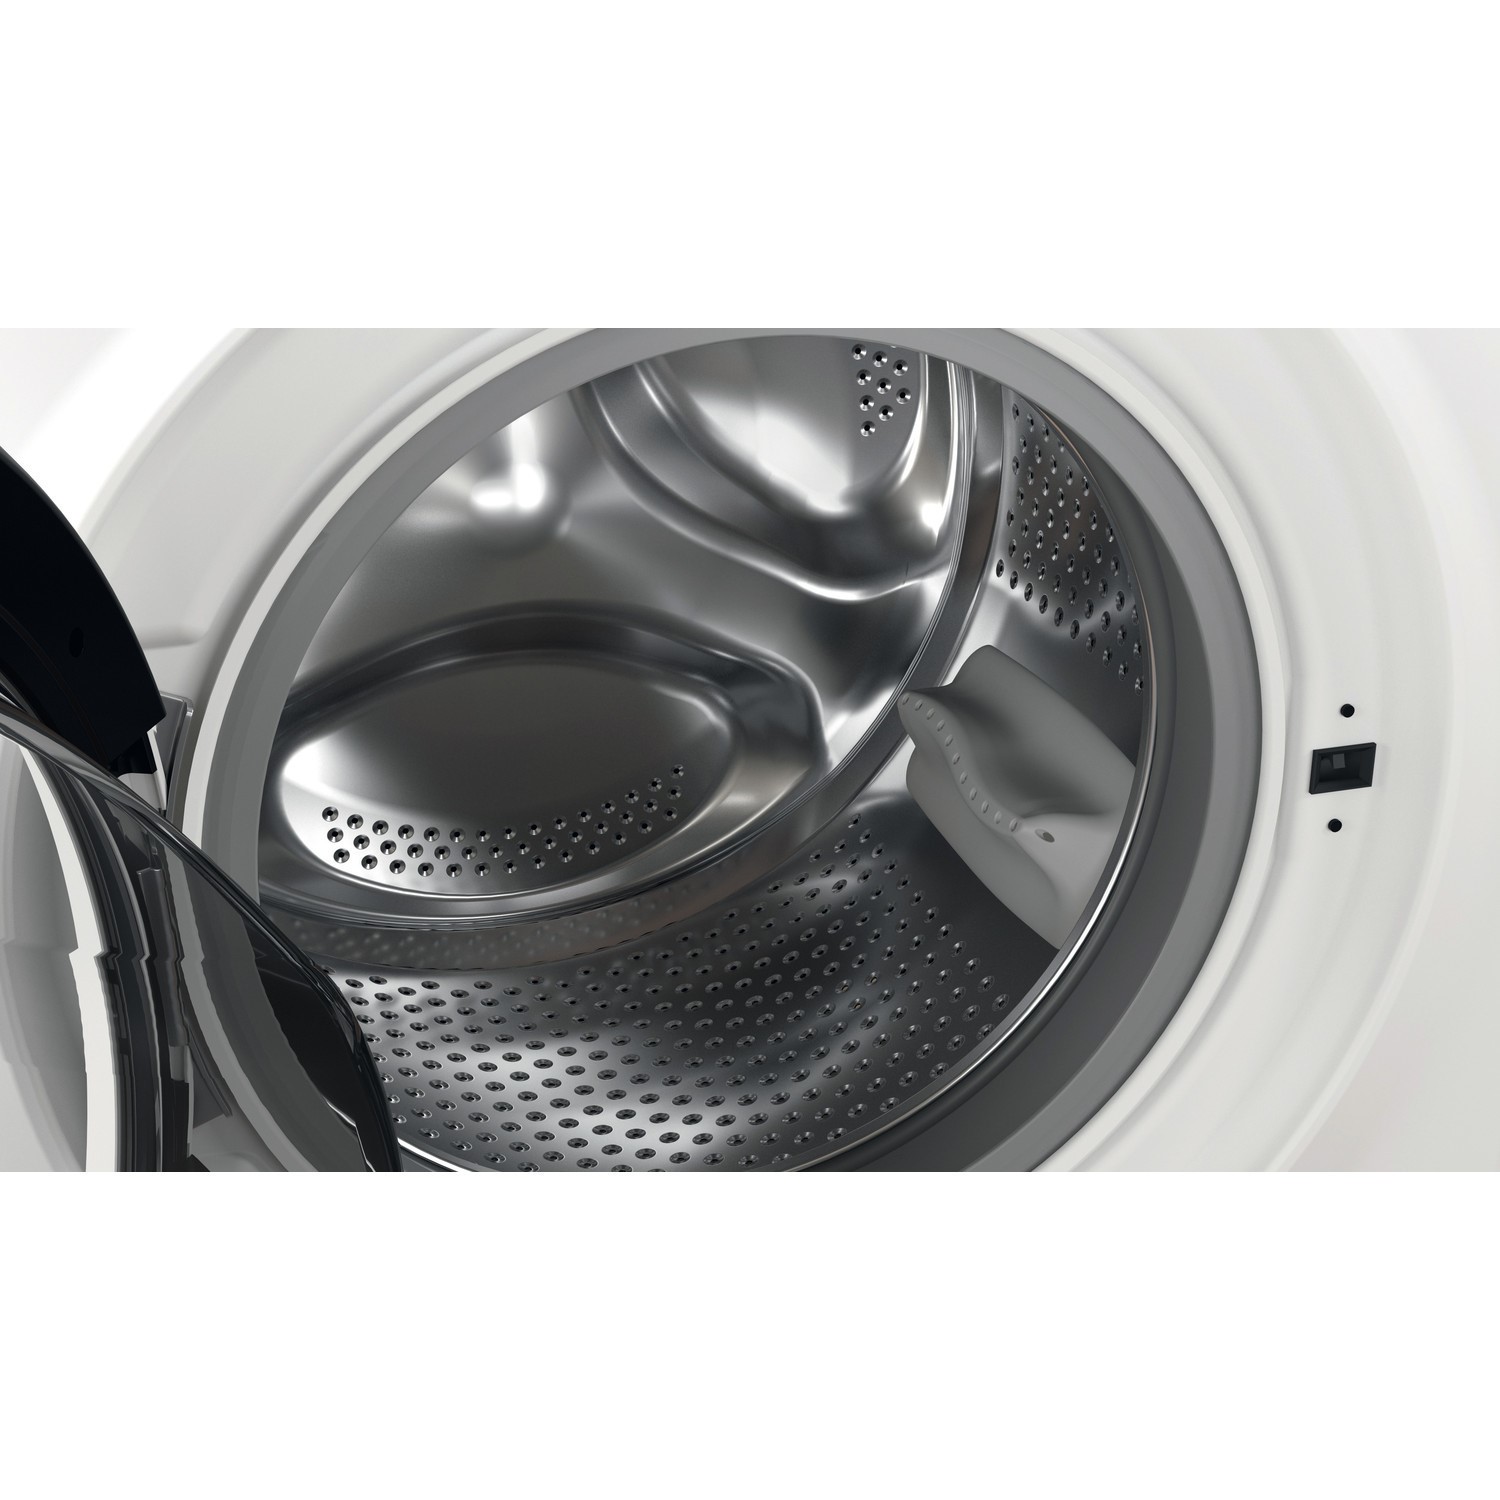 Hotpoint 8kg 1400rpm Freestanding Washing Machine - White